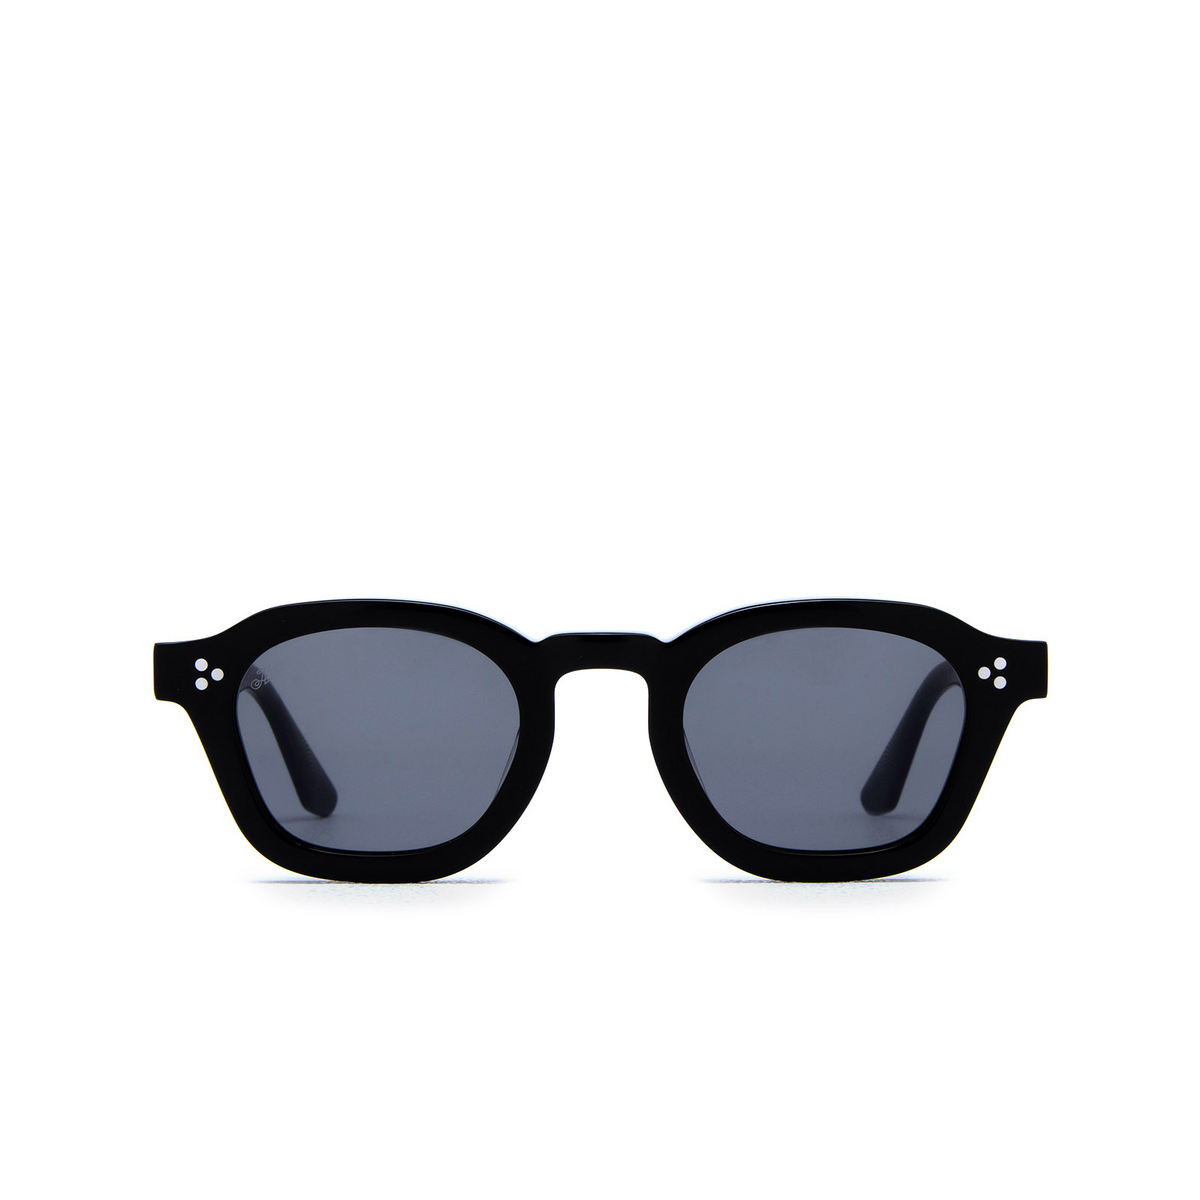 Akila LOGOS Sunglasses 01/01 Black - front view